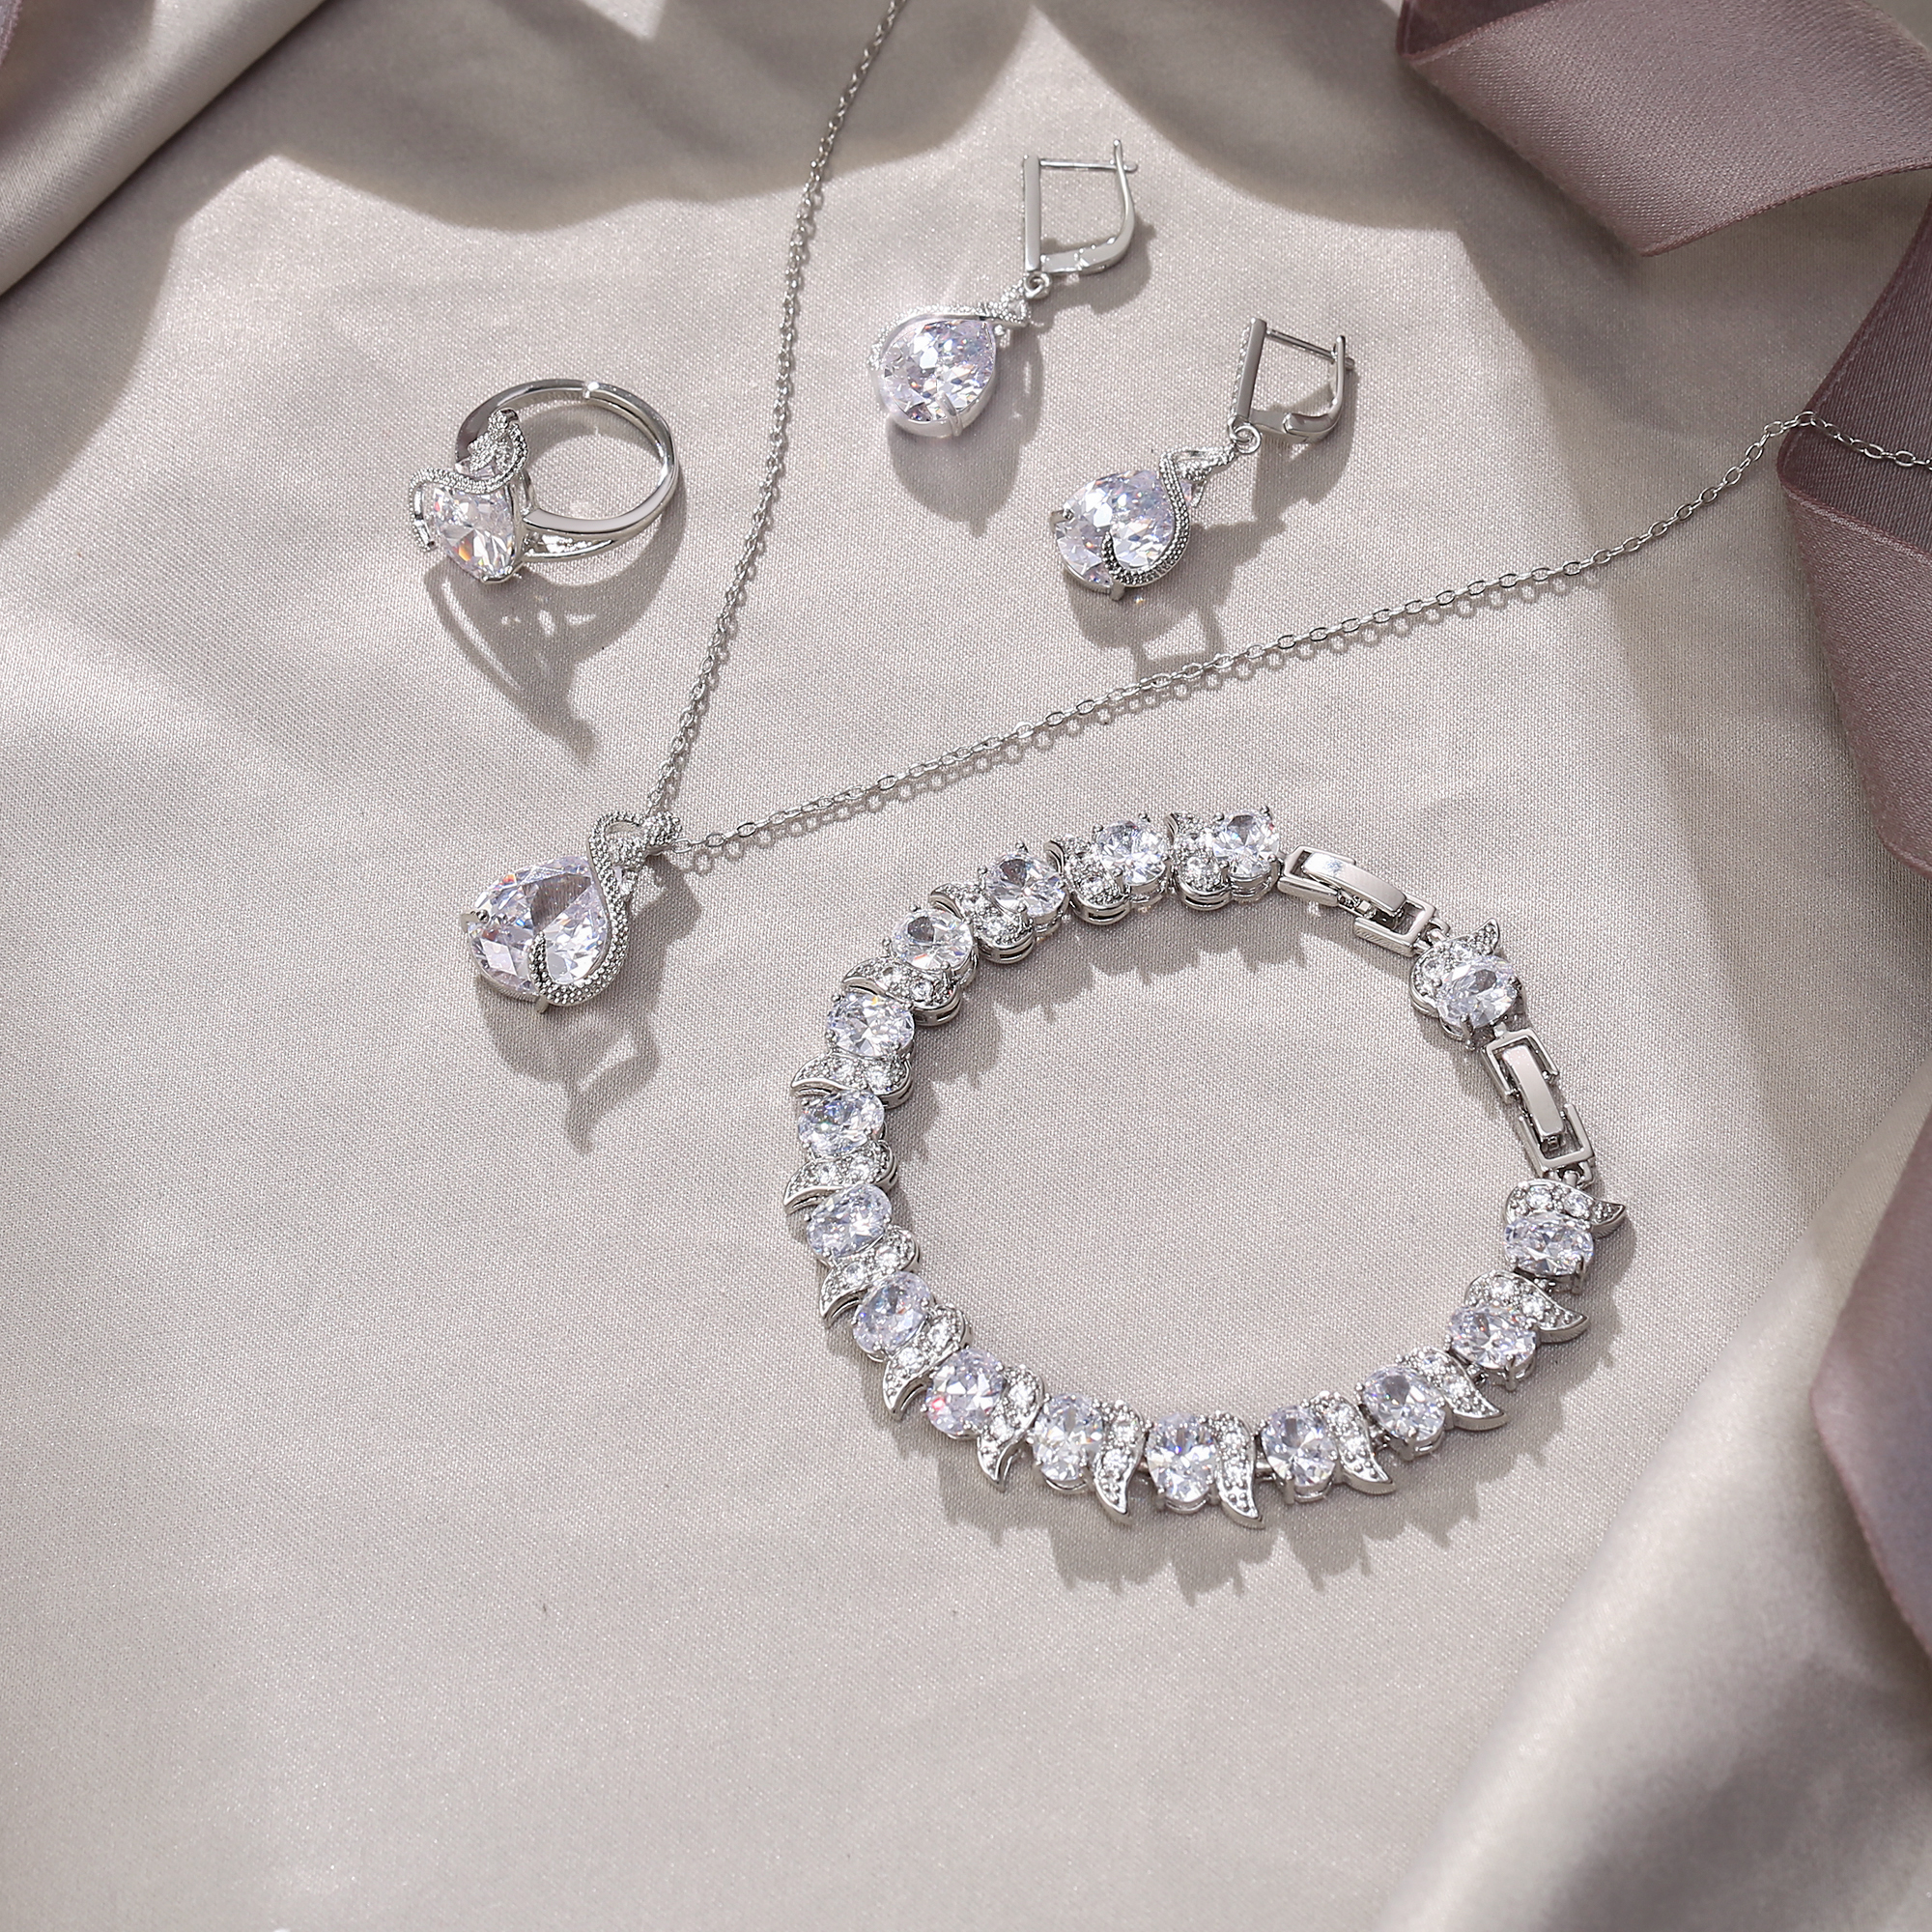 Wedure Wedding Teardrop Cubic Zirconia Jewelry Set for Bride, Glamour Pendant Necklace Earrings Tennis Bracelet Open Ring Set for Women Clear Silver-Tone - image 3 of 4